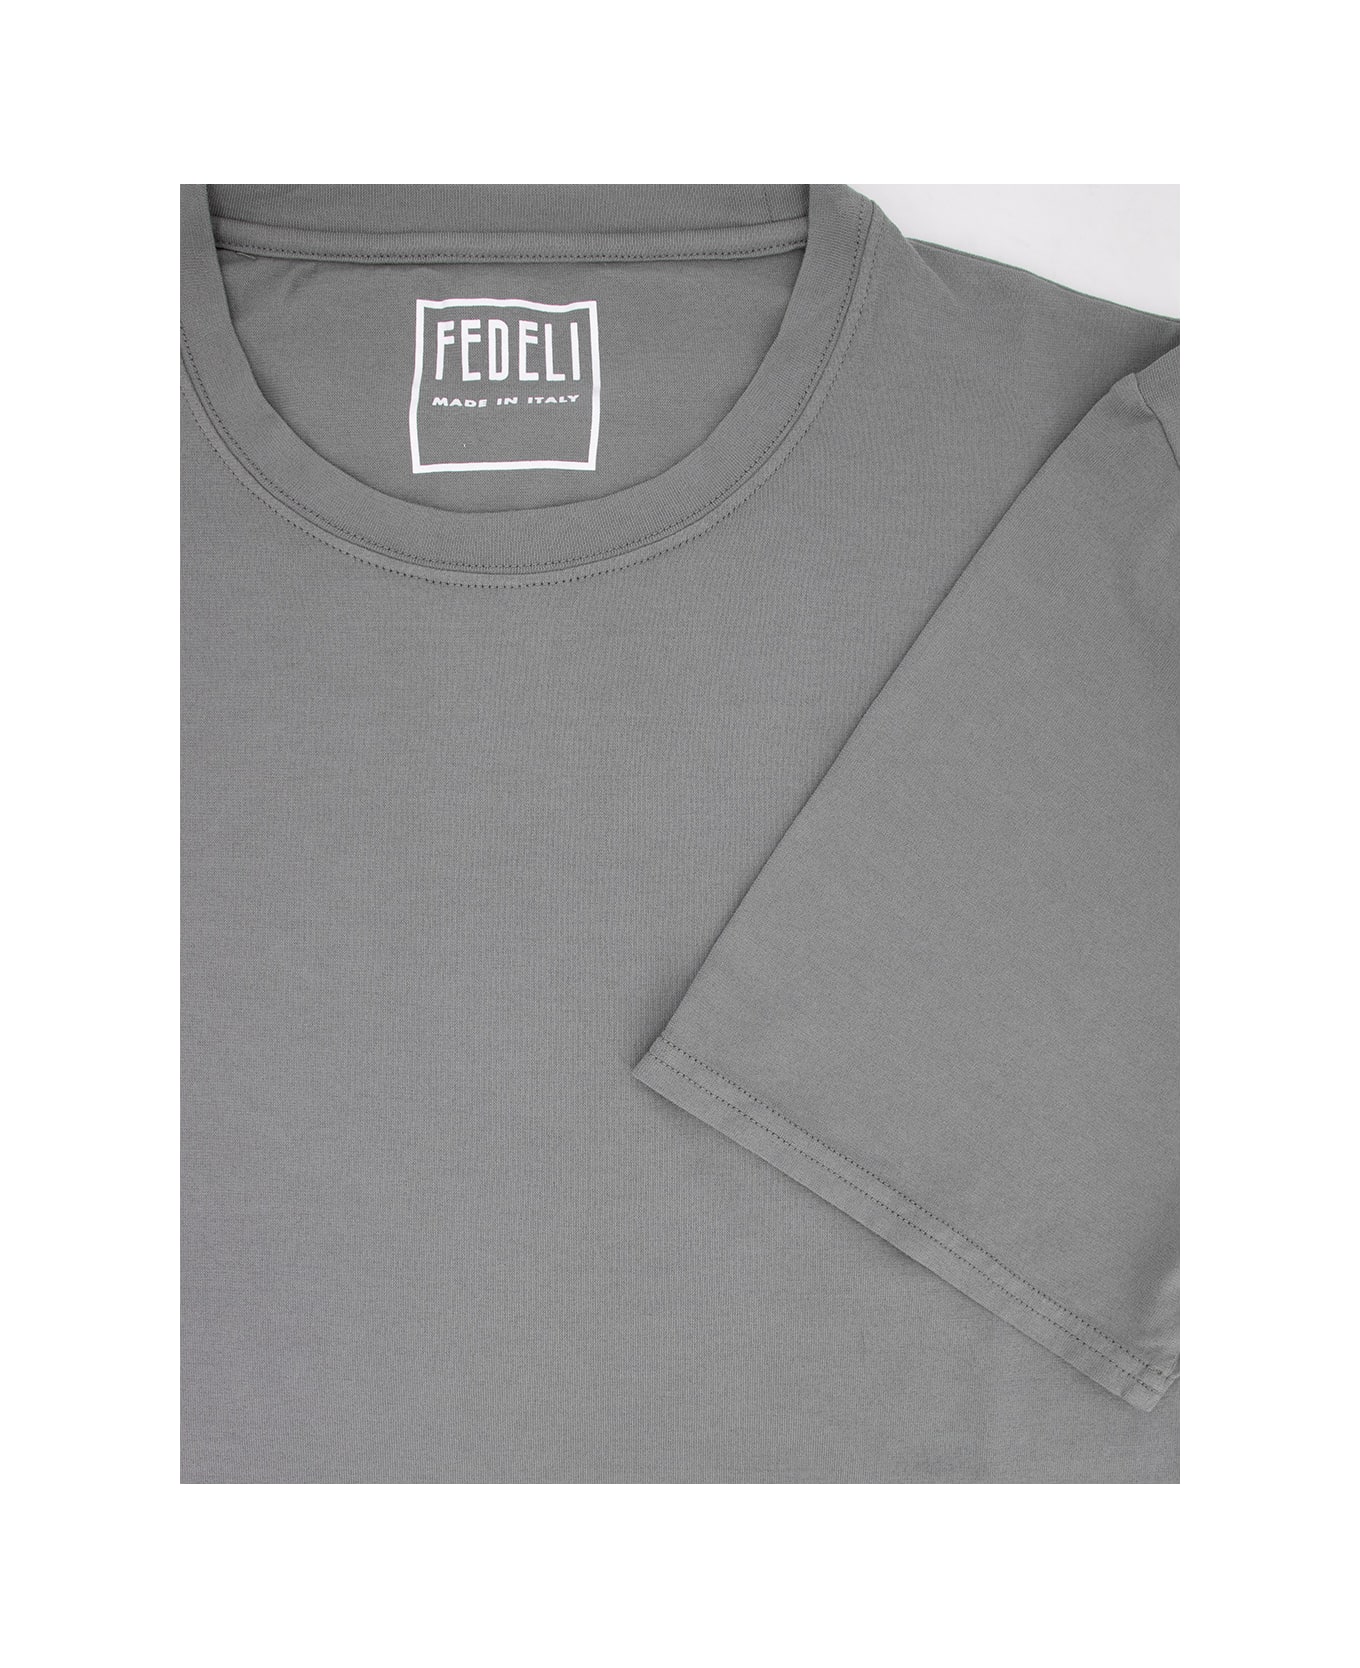 Fedeli T-shirt - 710